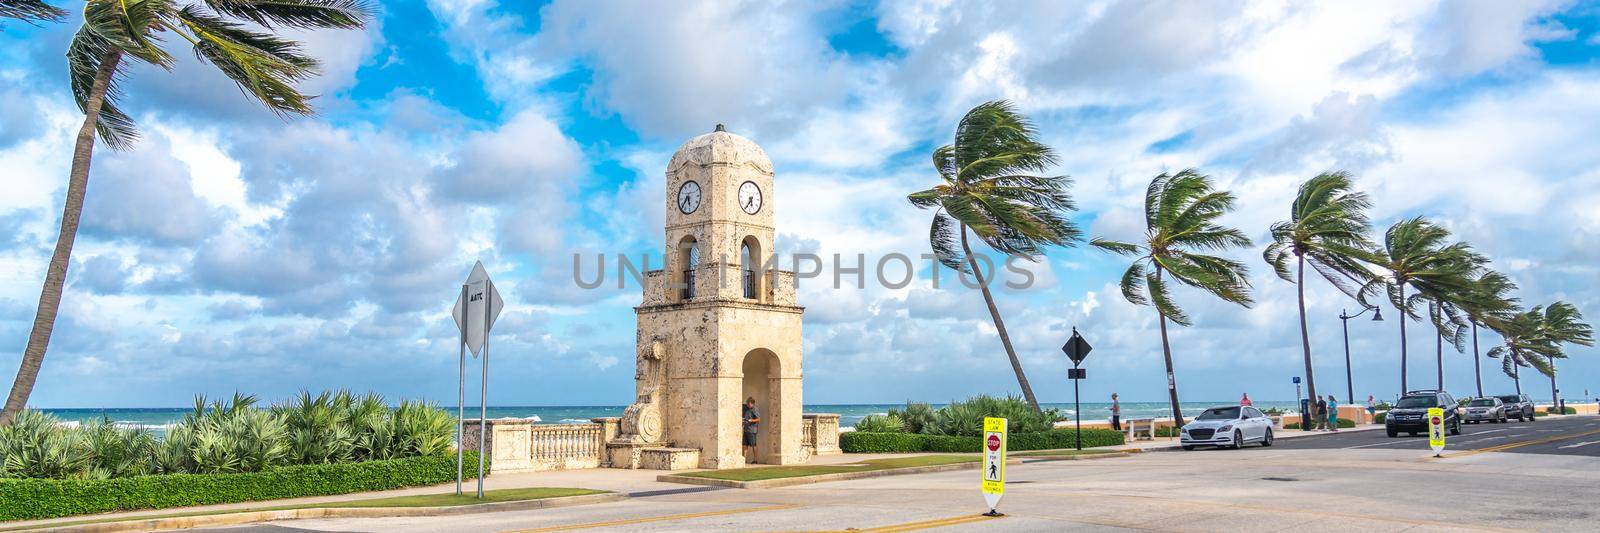 Palm Beach, Florida, USA - September 14, 2019: Worth Avenue clock tower in Florida USA by Mariakray